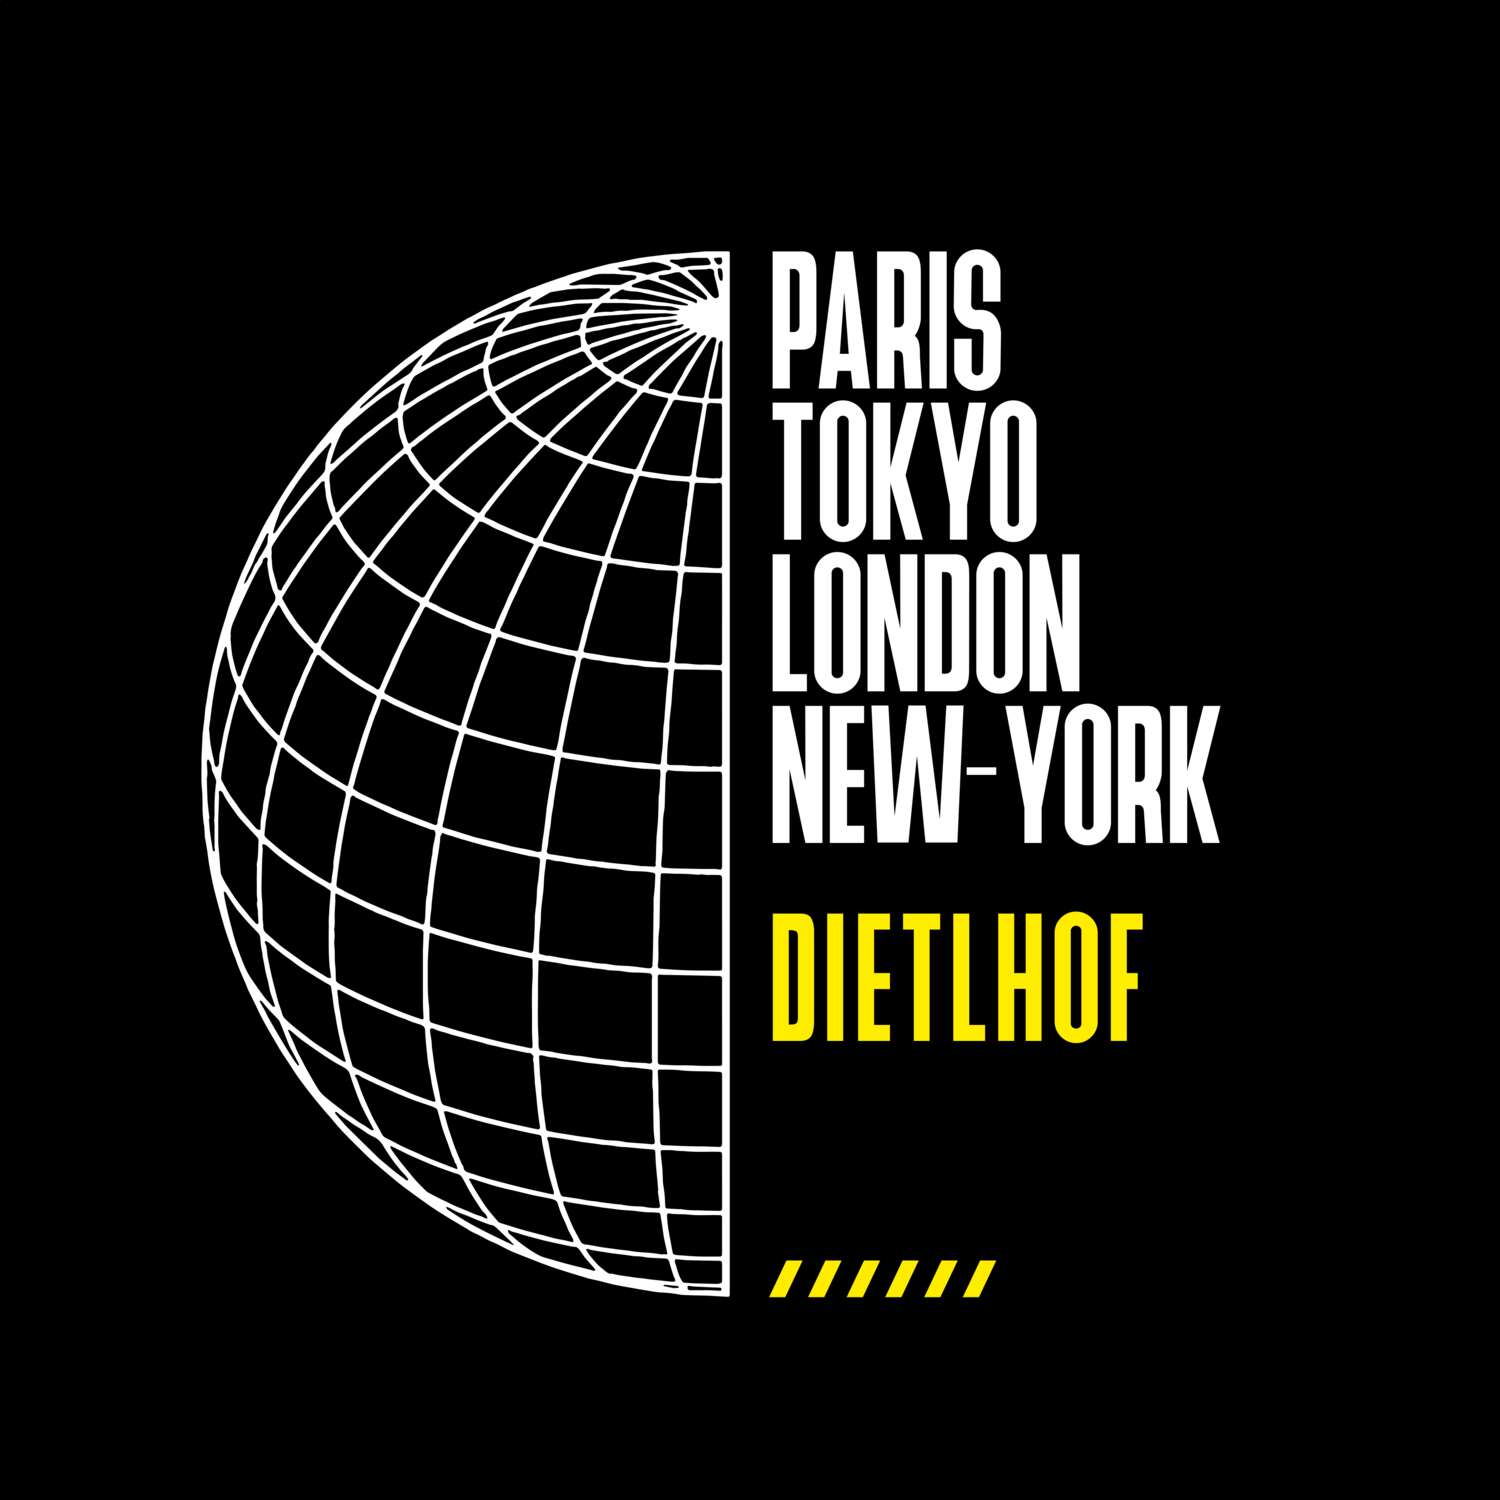 Dietlhof T-Shirt »Paris Tokyo London«